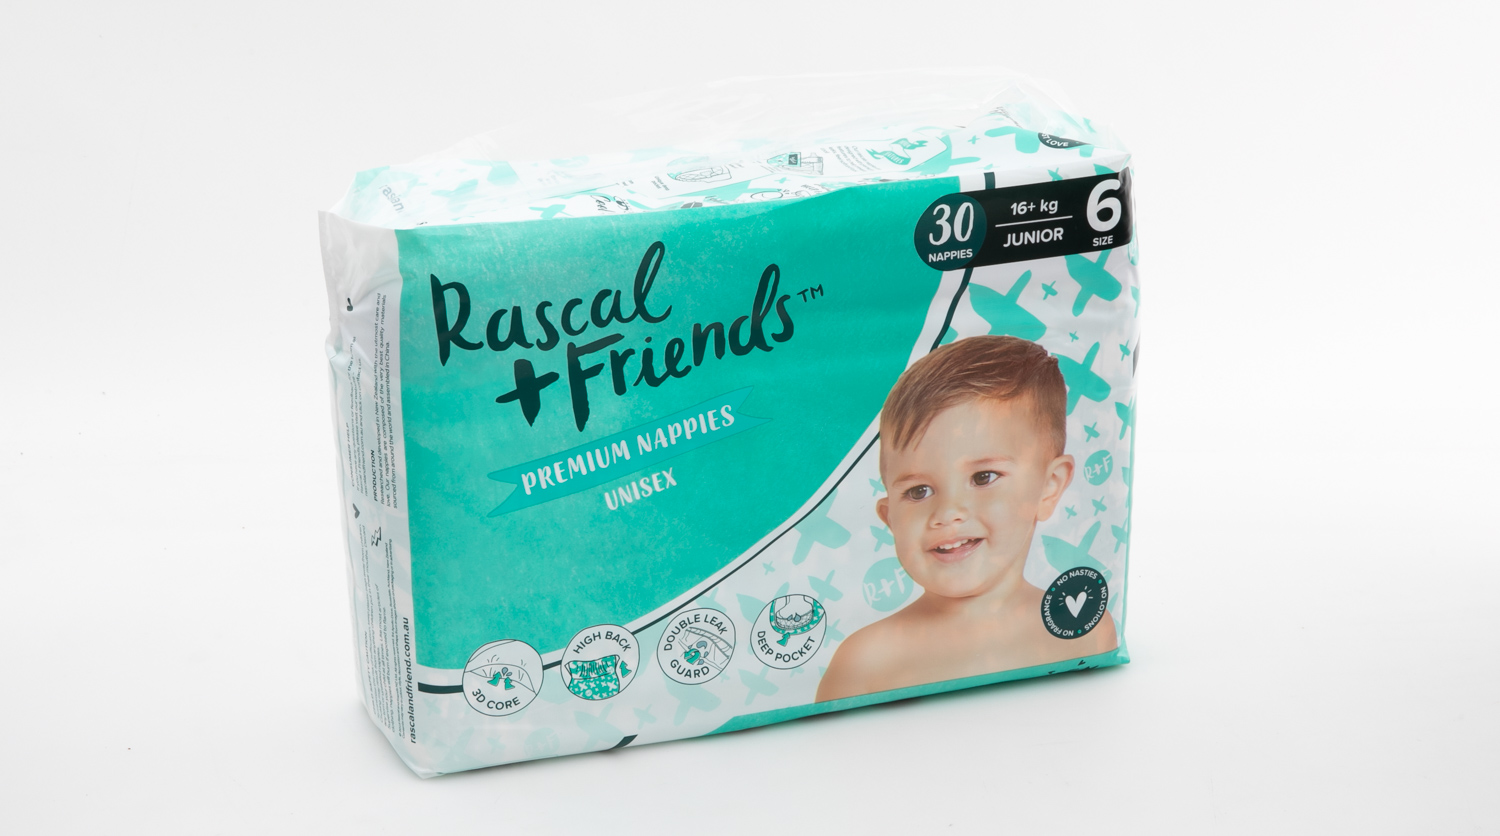 https://pdbimg.choice.com.au/rascal-friends-premium-nappies-unisex-junior-size-6_1.jpg